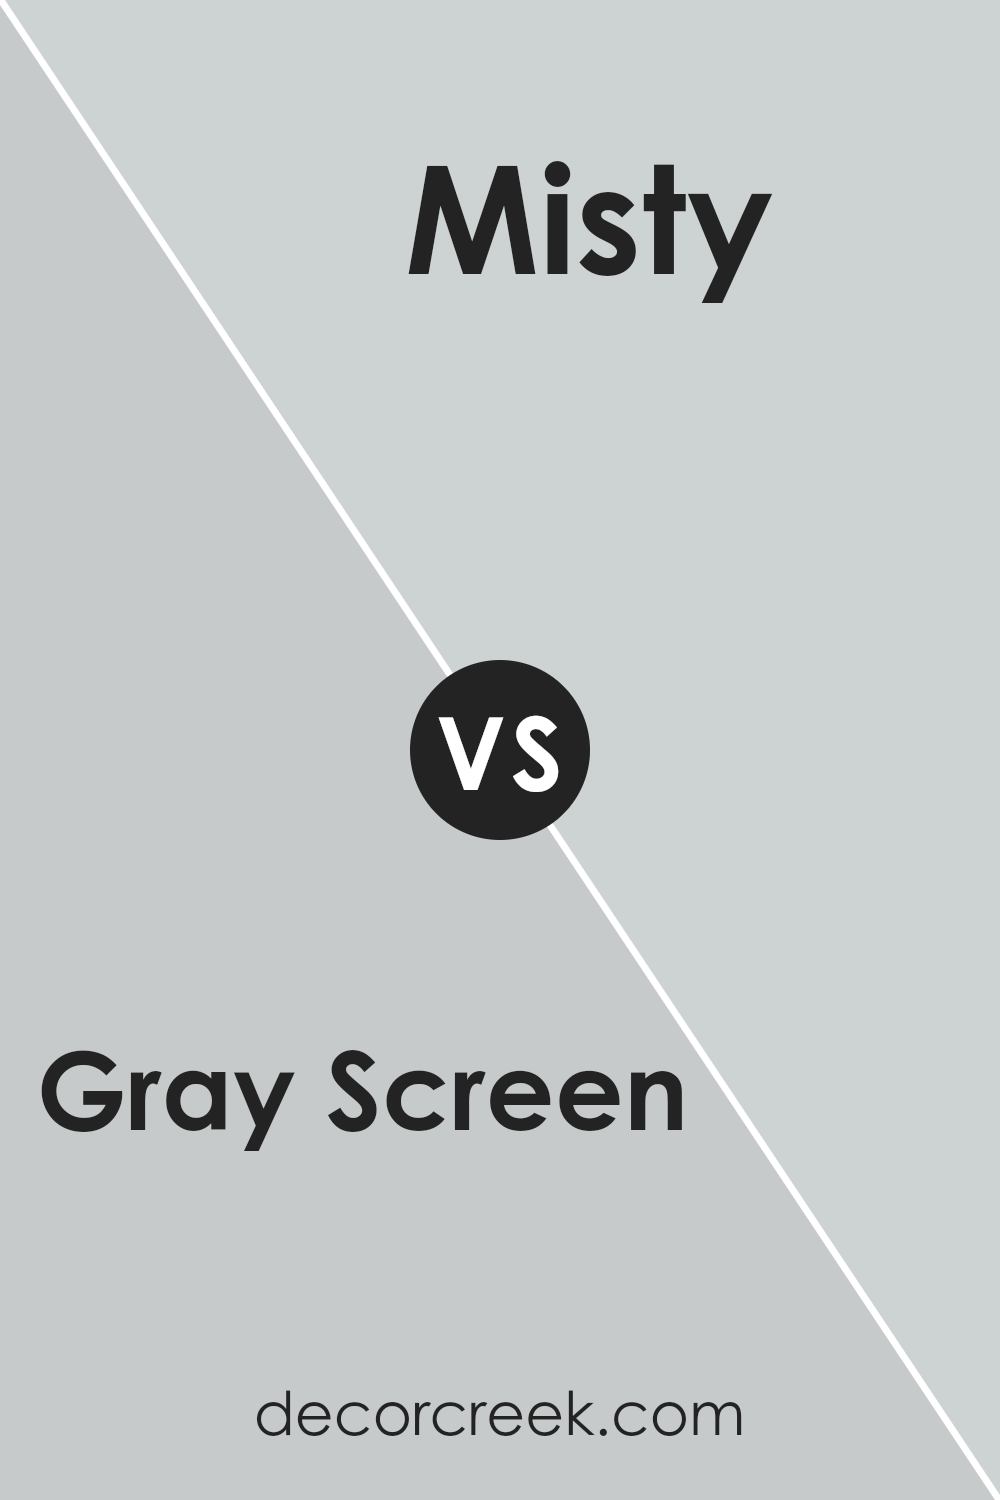 gray_screen_sw_7071_vs_misty_sw_6232